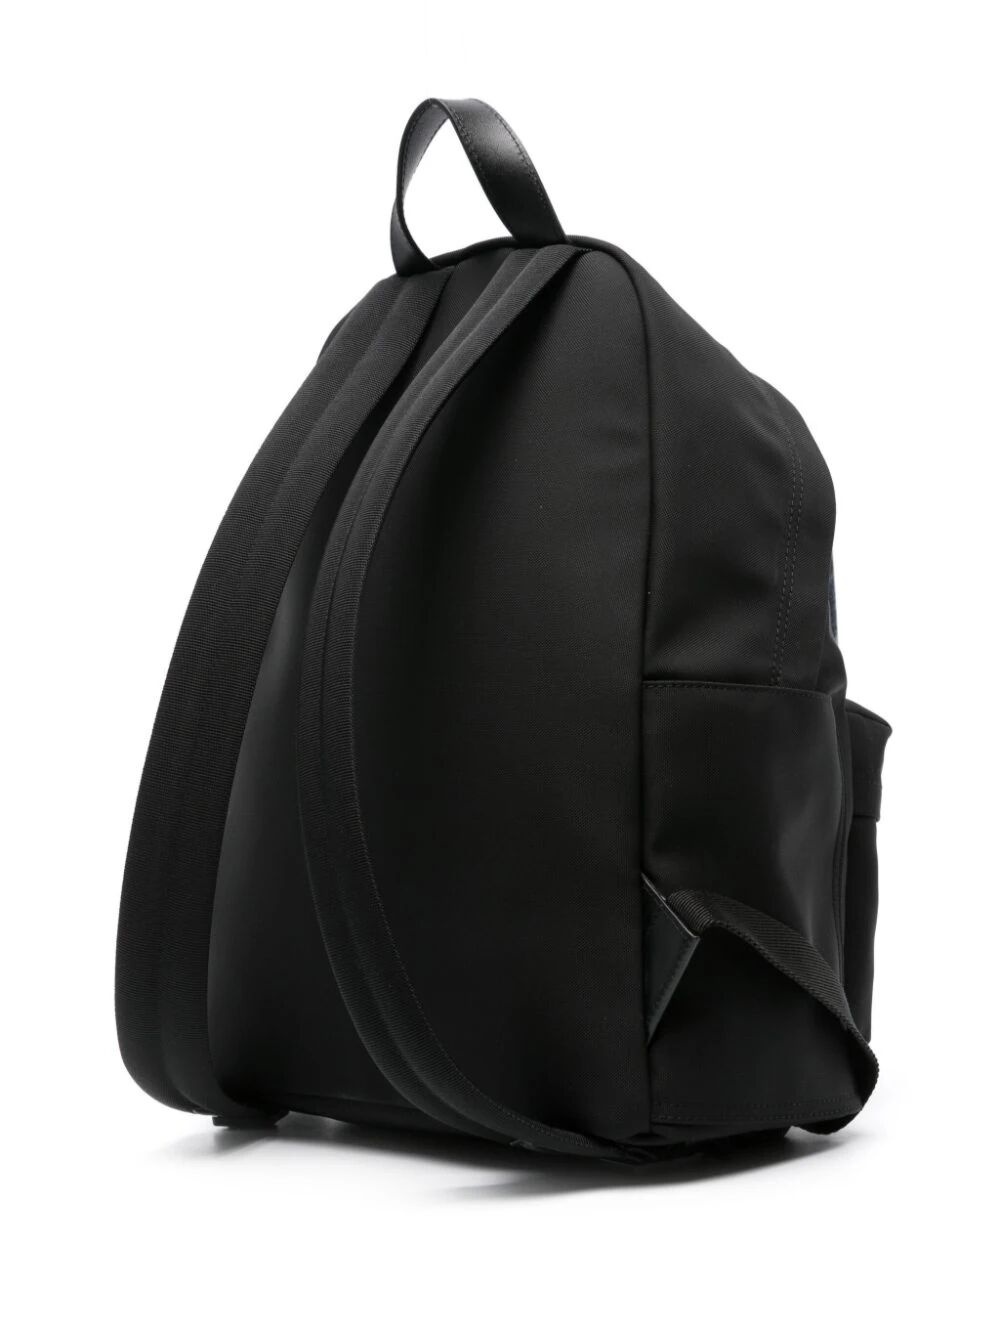 New pierrick backpack - 3